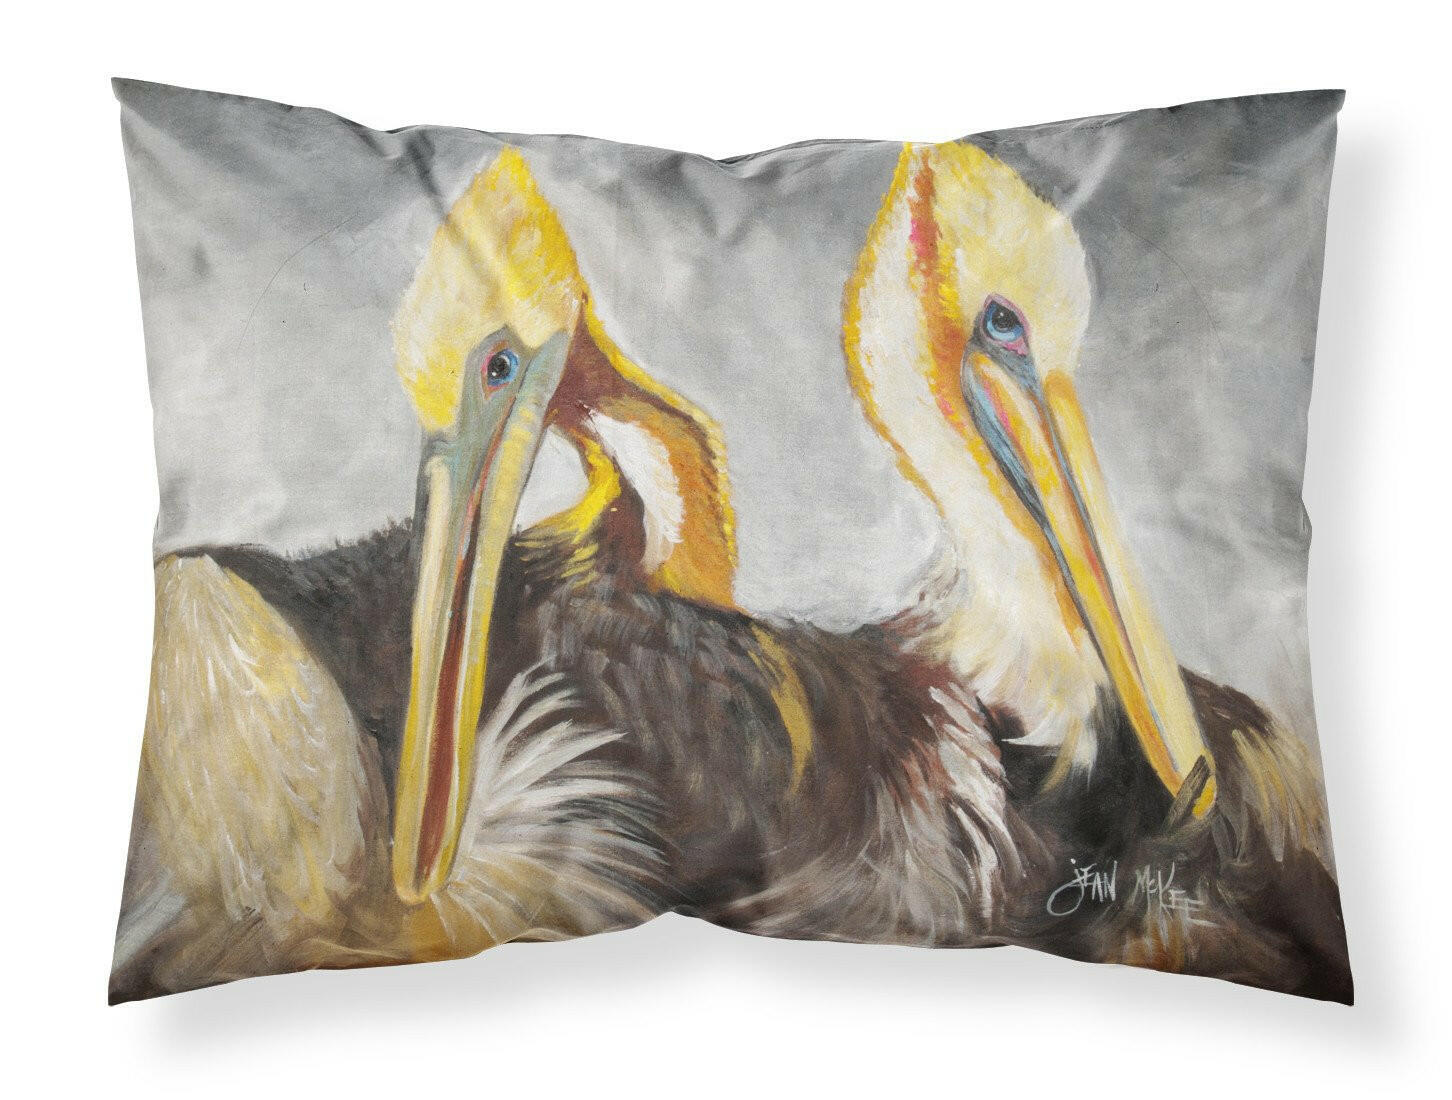 Pelicans Preening Fabric Standard Pillowcase JMK1025PILLOWCASE by Caroline's Treasures